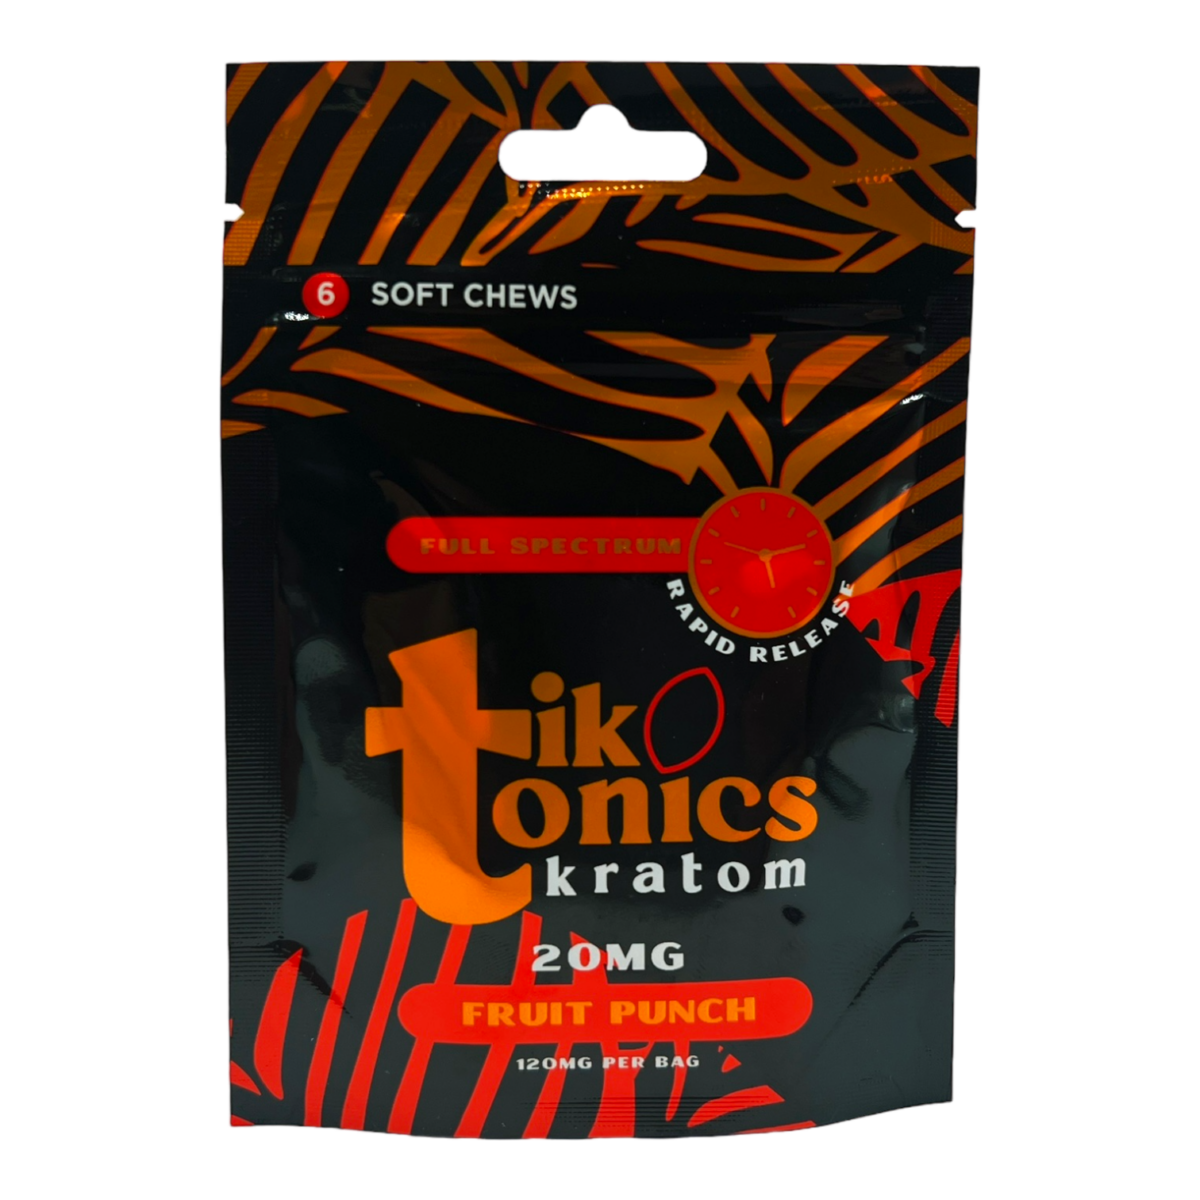 Tik Tonics Kratom Soft Chews – 6CT